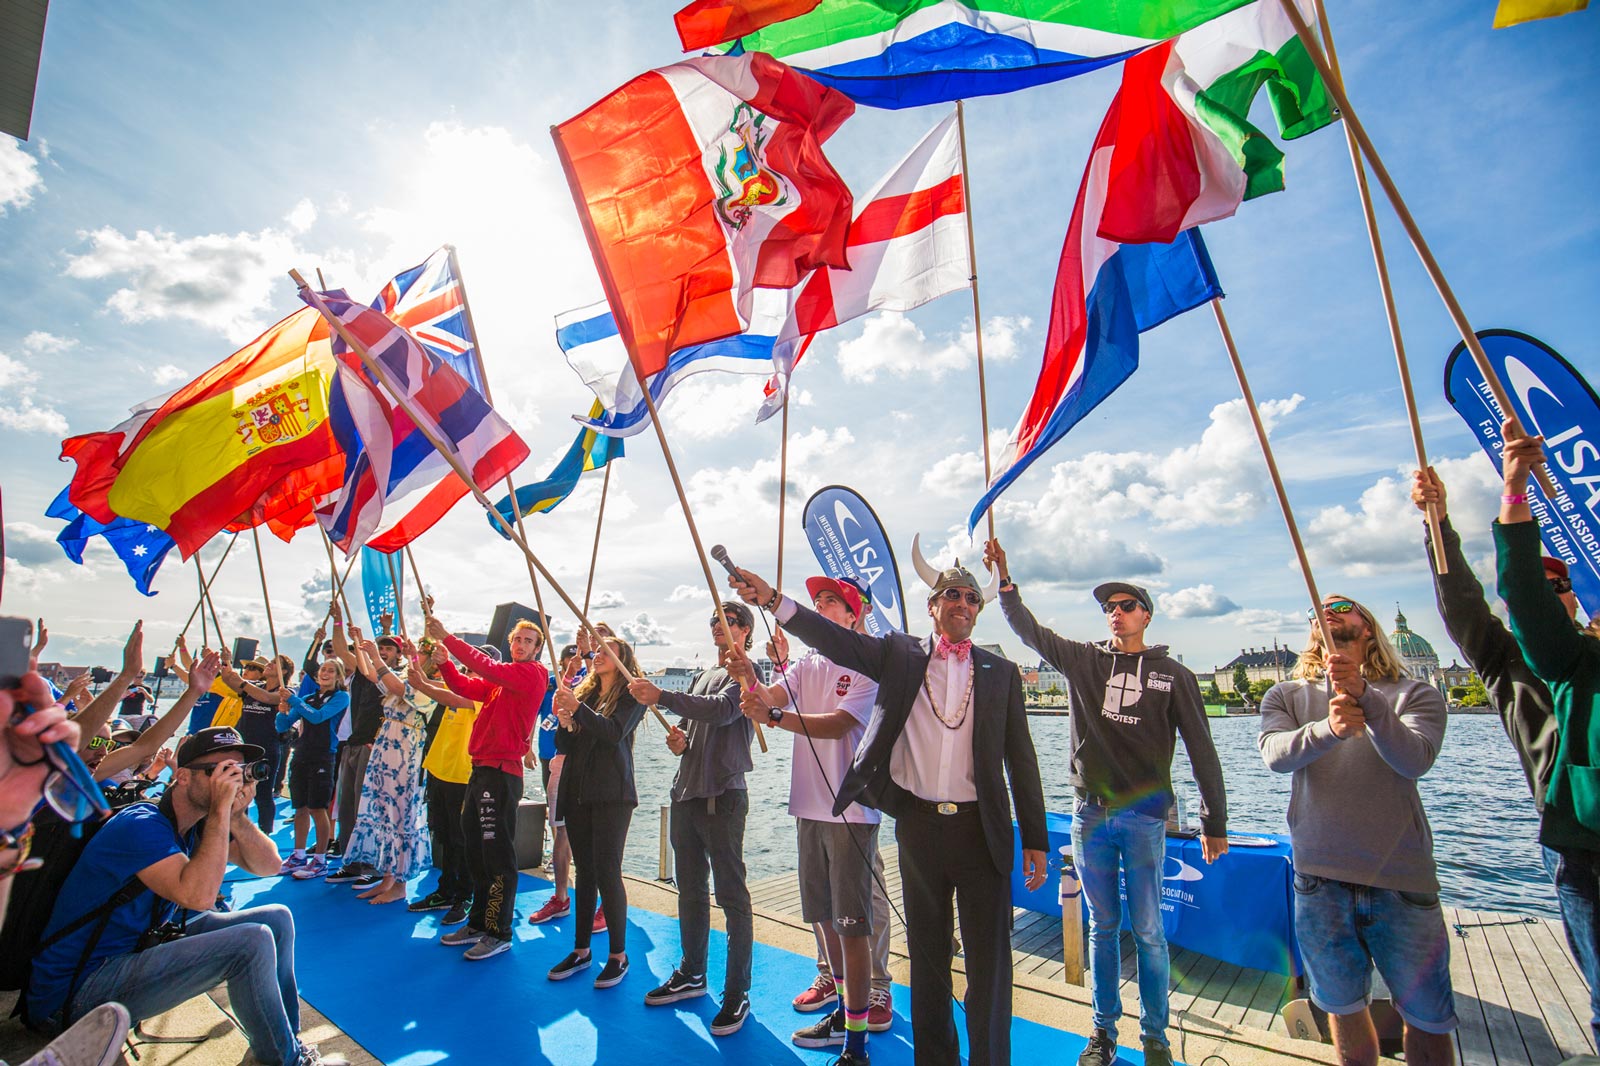 ISA-World-stand-up-paddleboarding-championship-Denmark-2017